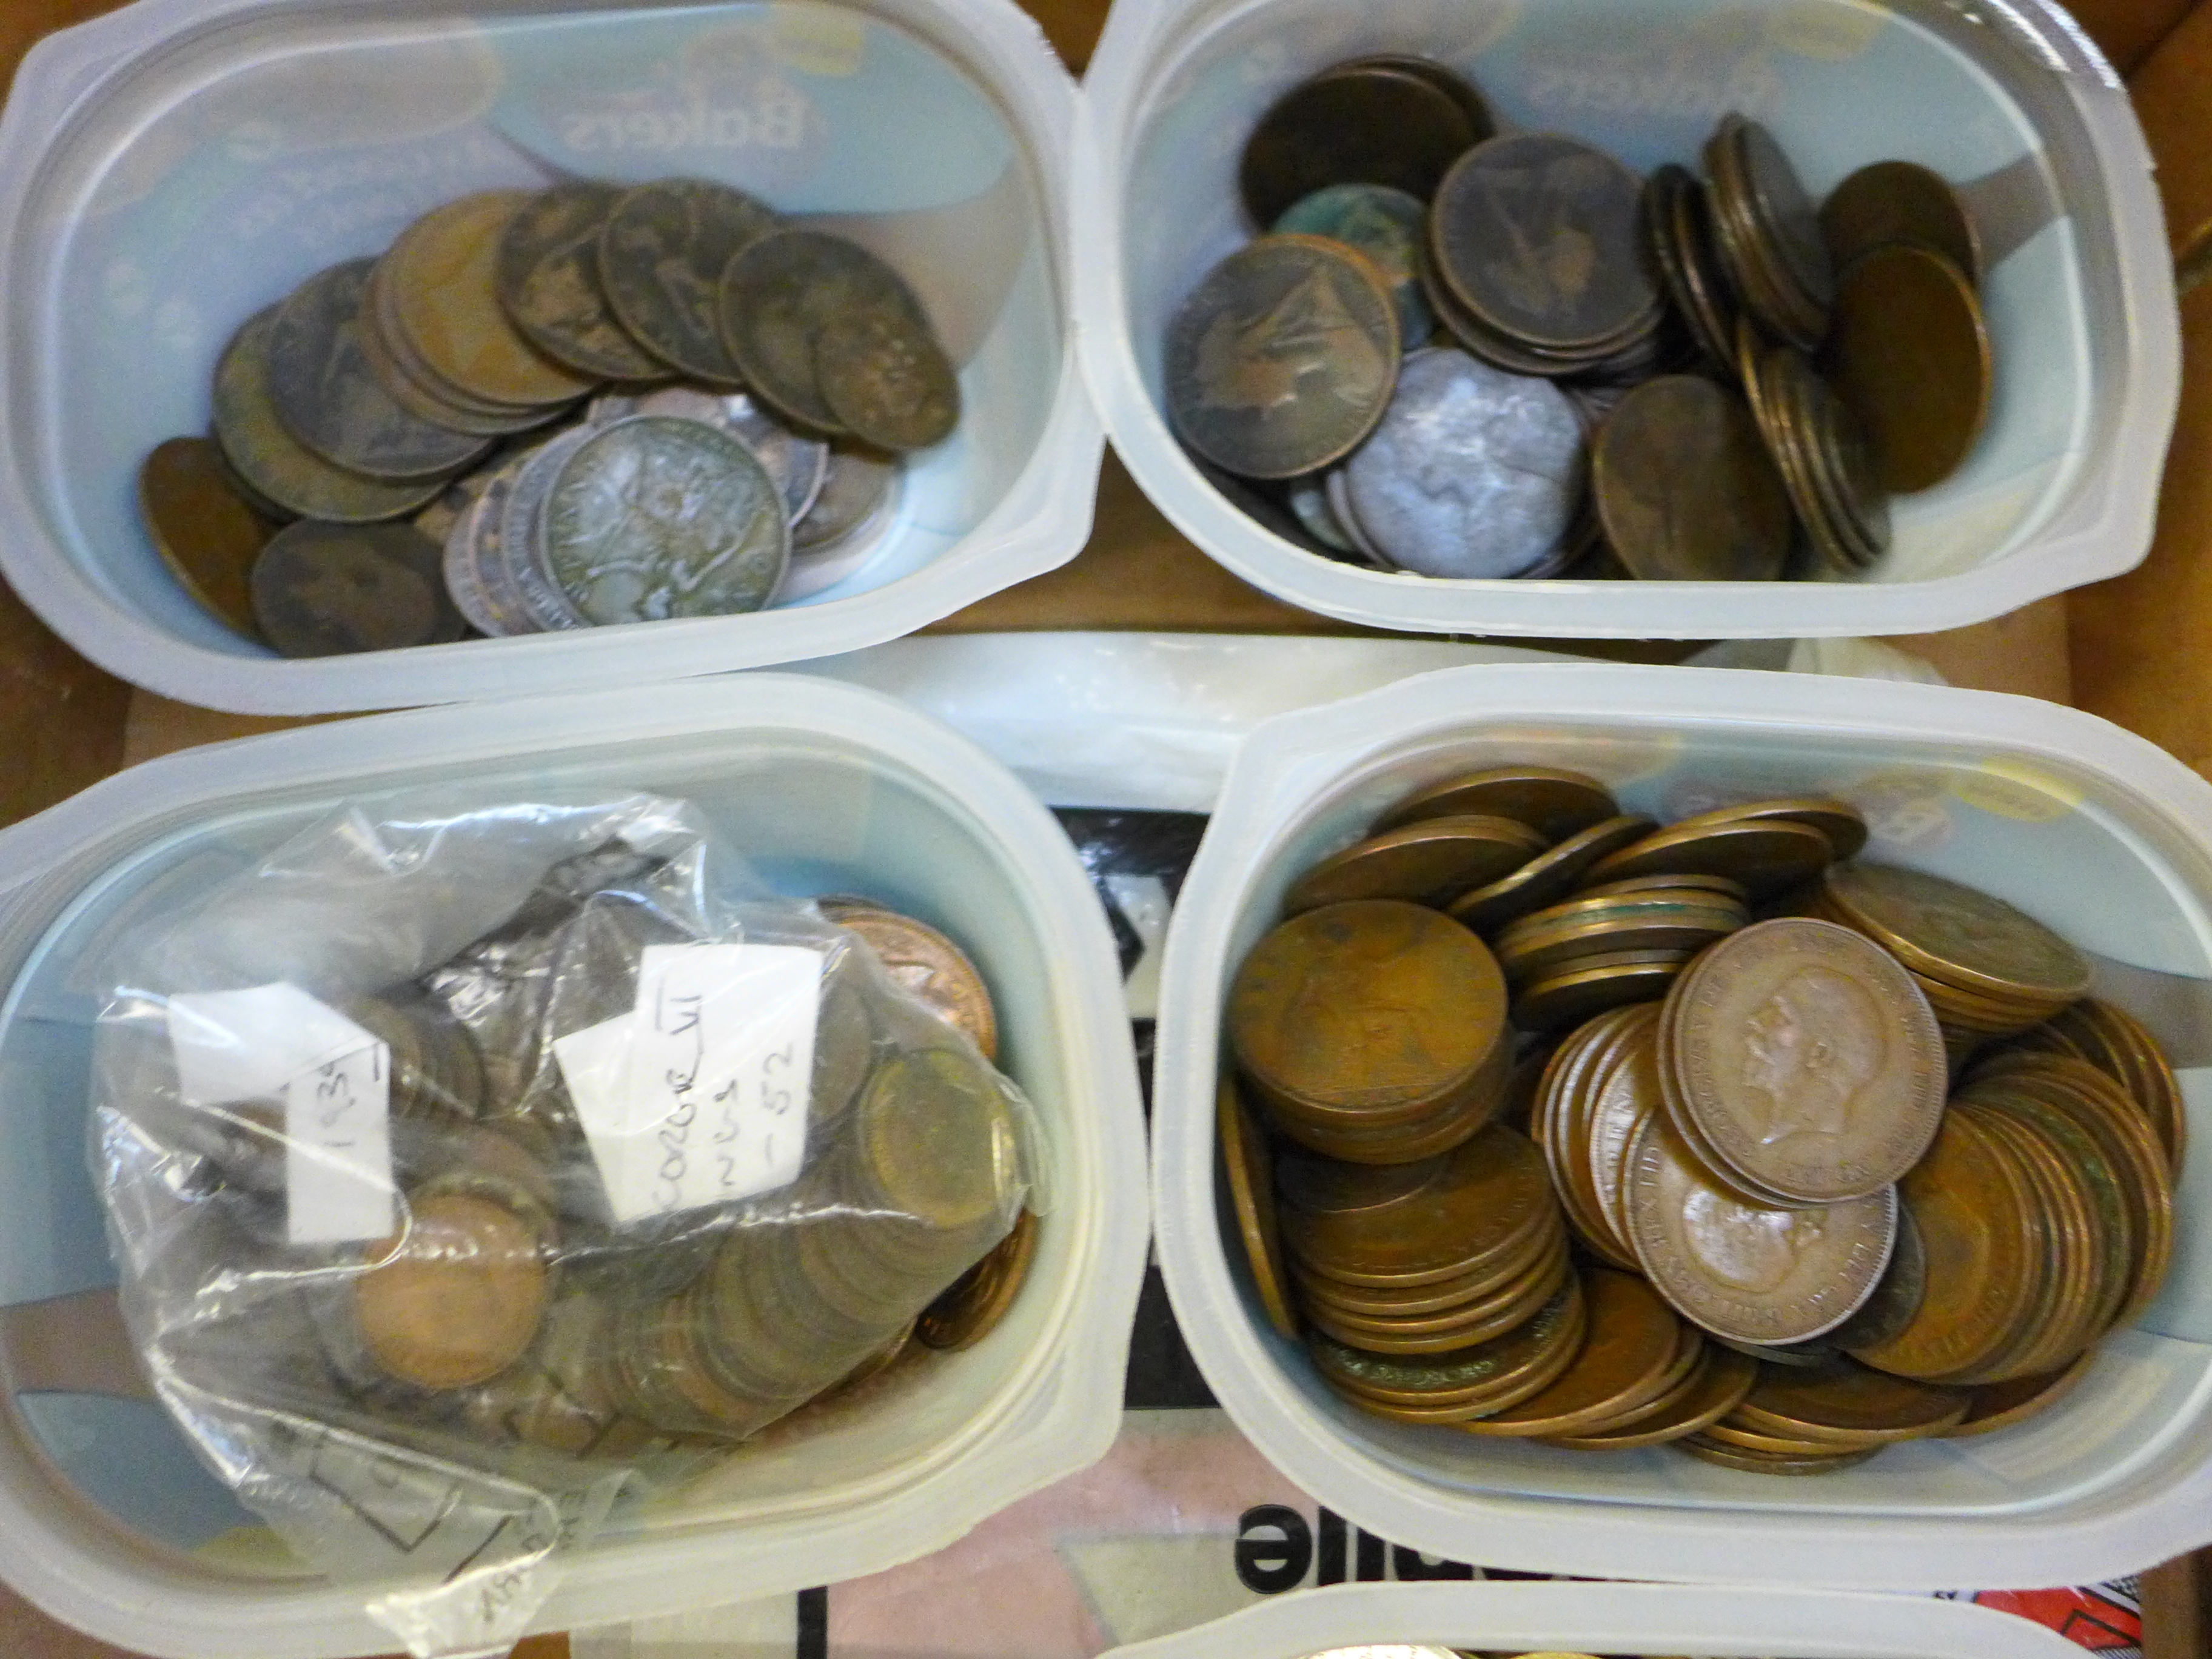 Bulk coin collections (1.25kg), including Victoria copper, Edward VII copper, George V copper, - Image 2 of 4